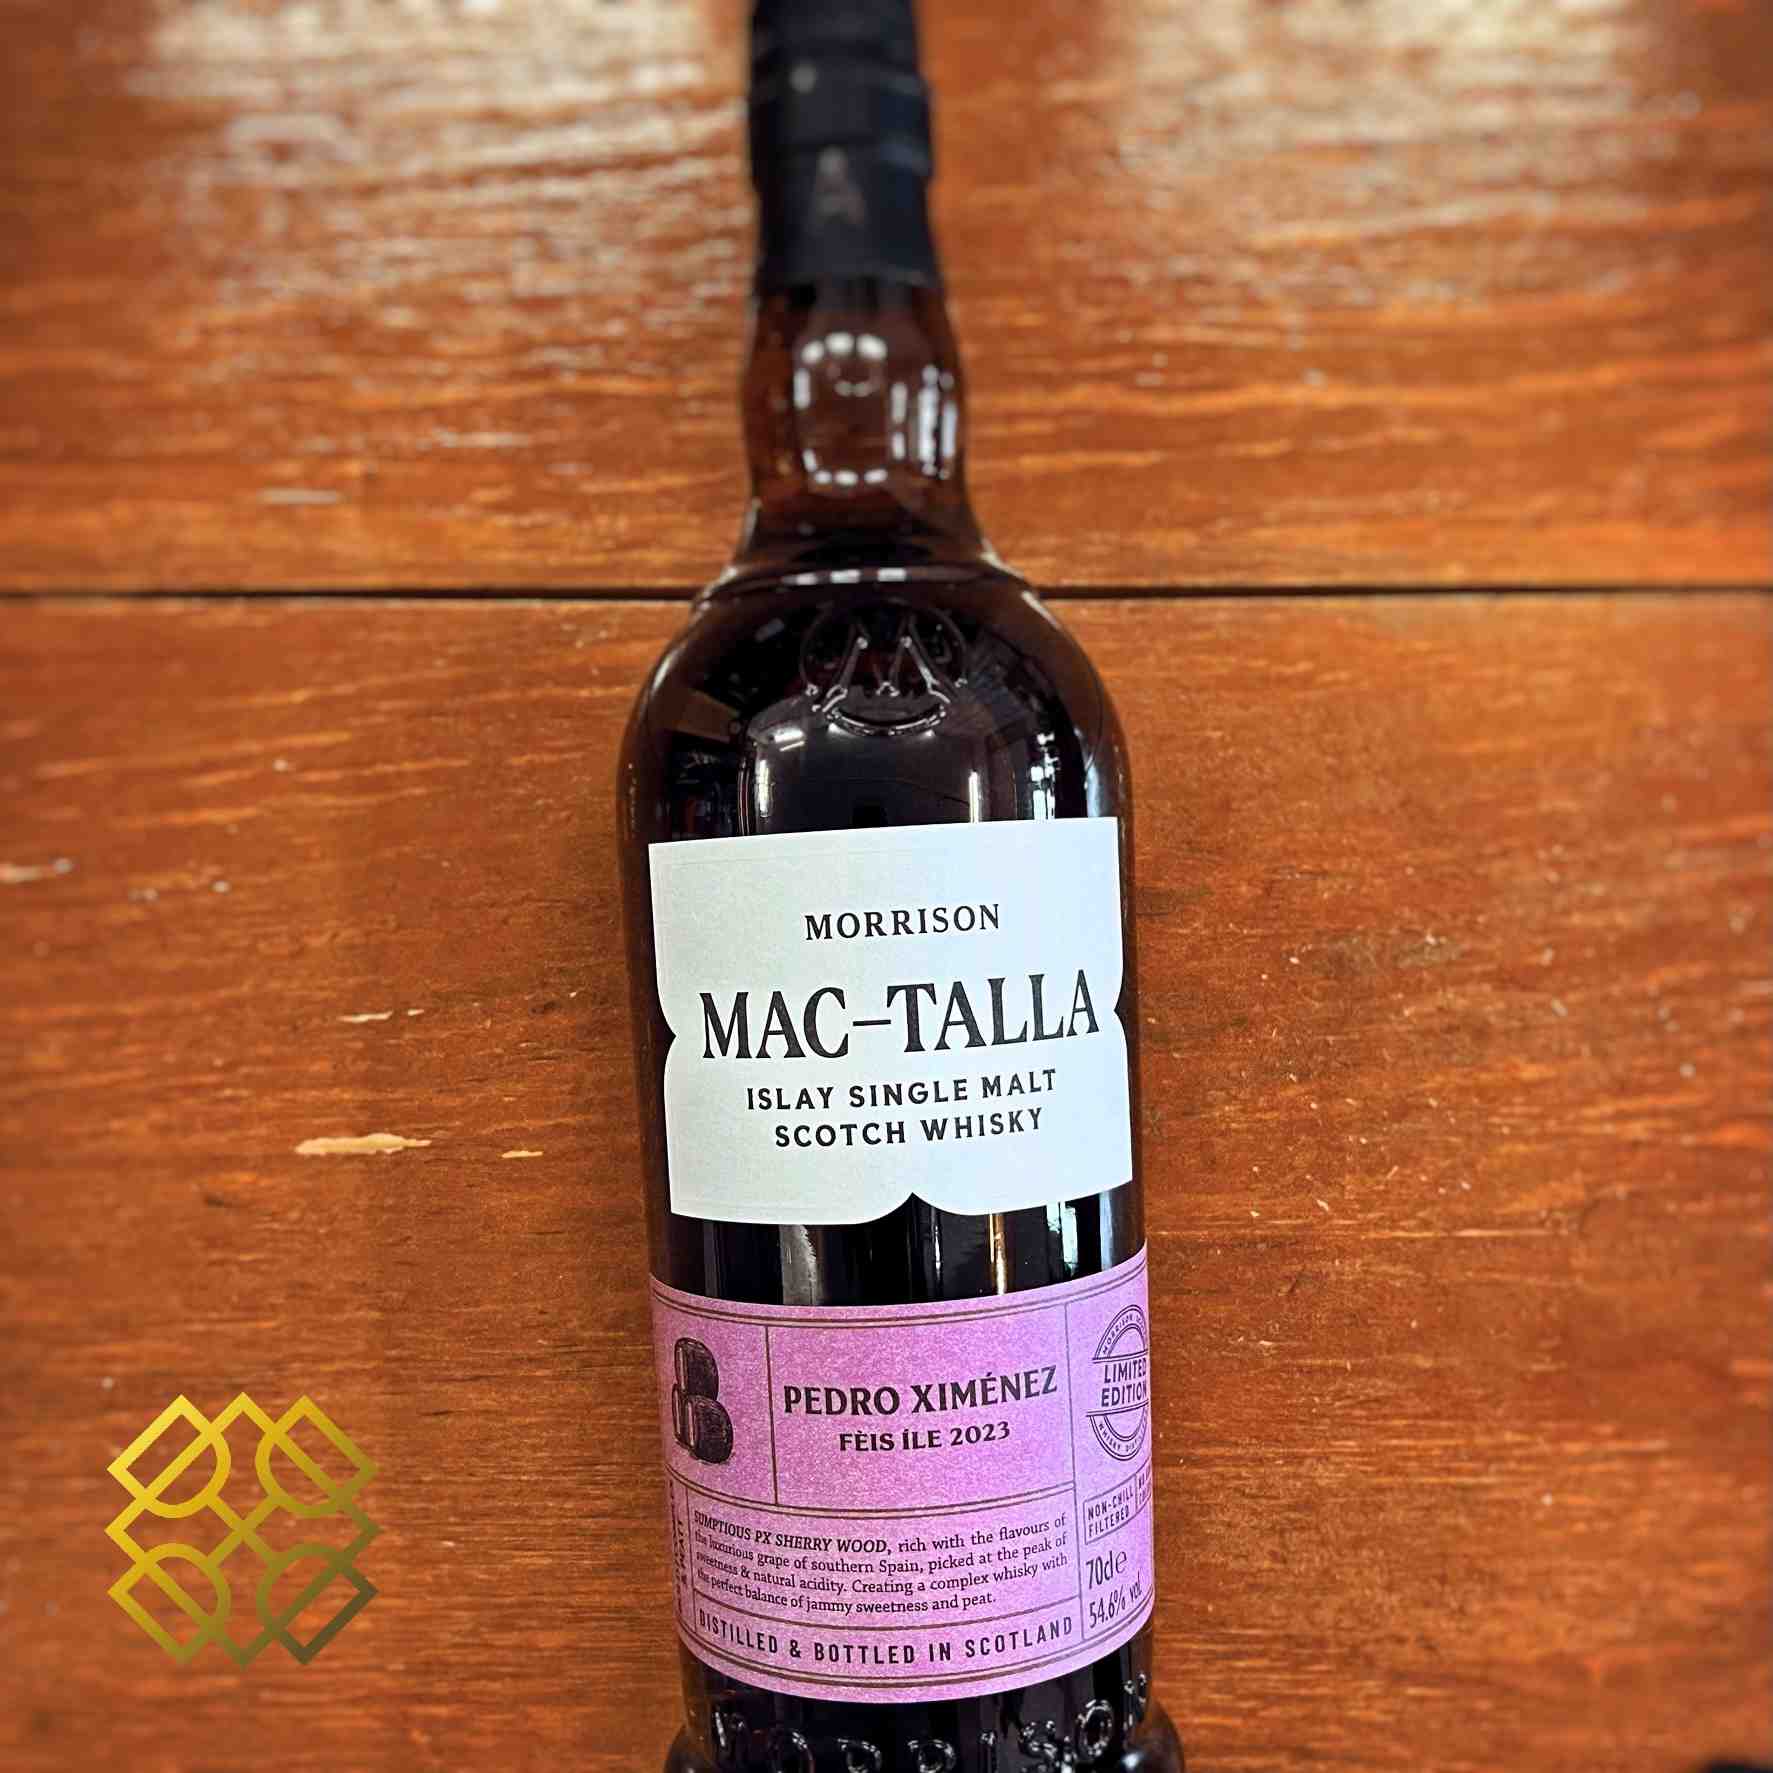 Mac-Talla - PX Edition, Feis Ile 2023 - 54.6% Type : Single malt whisky